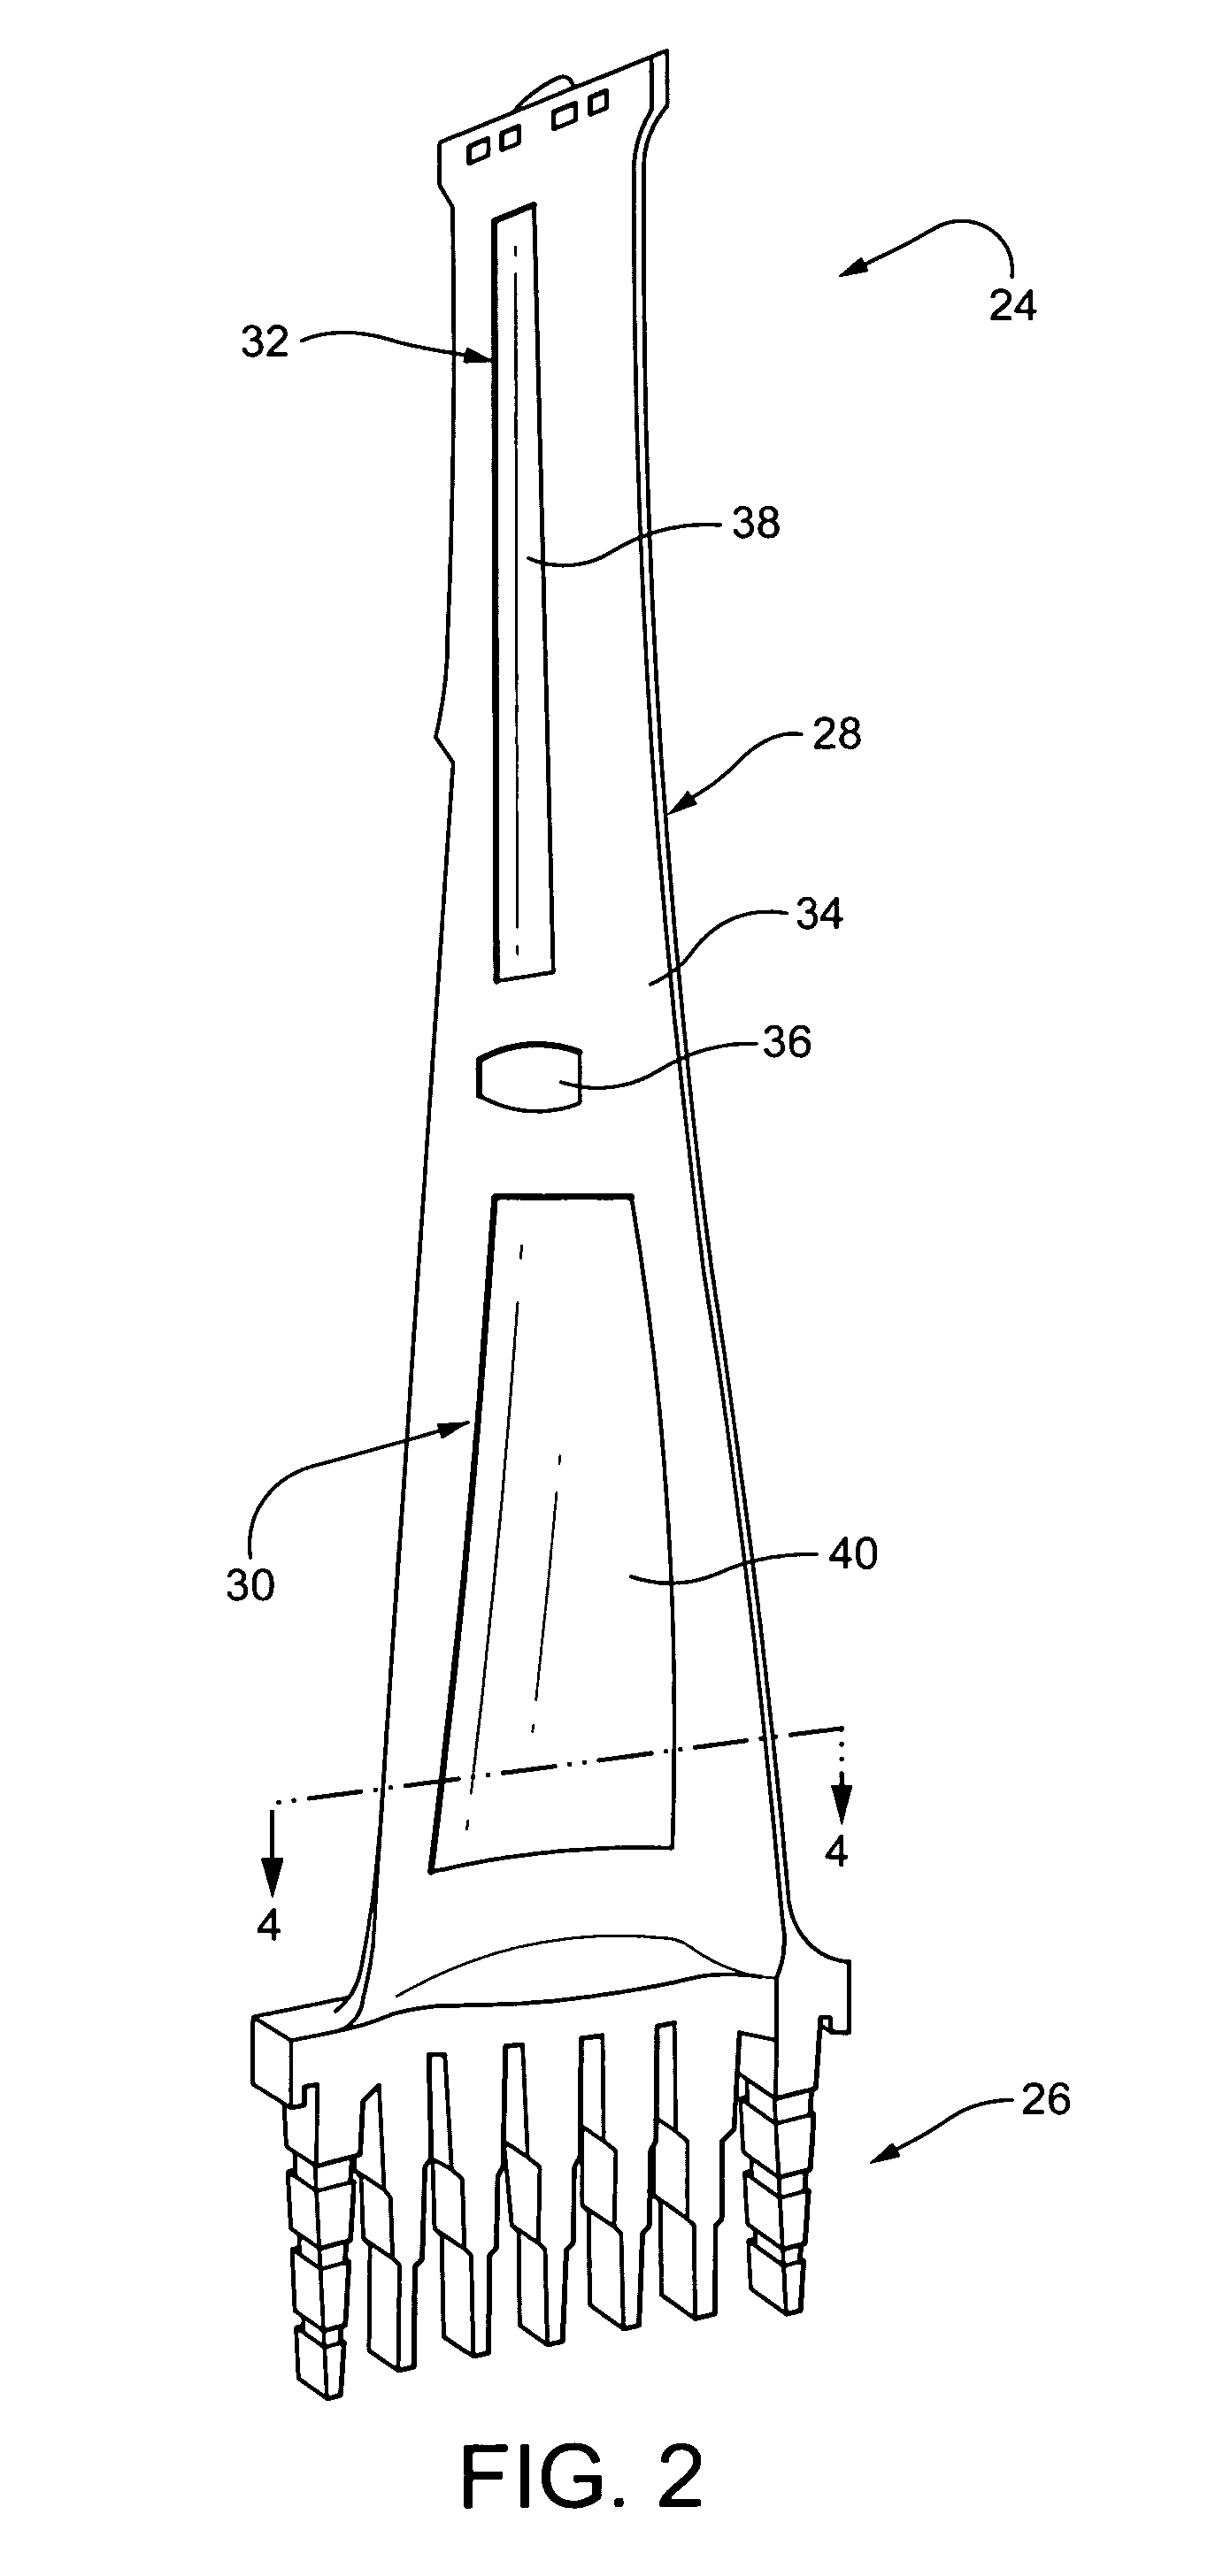 Hybrid blade for a steam turbine